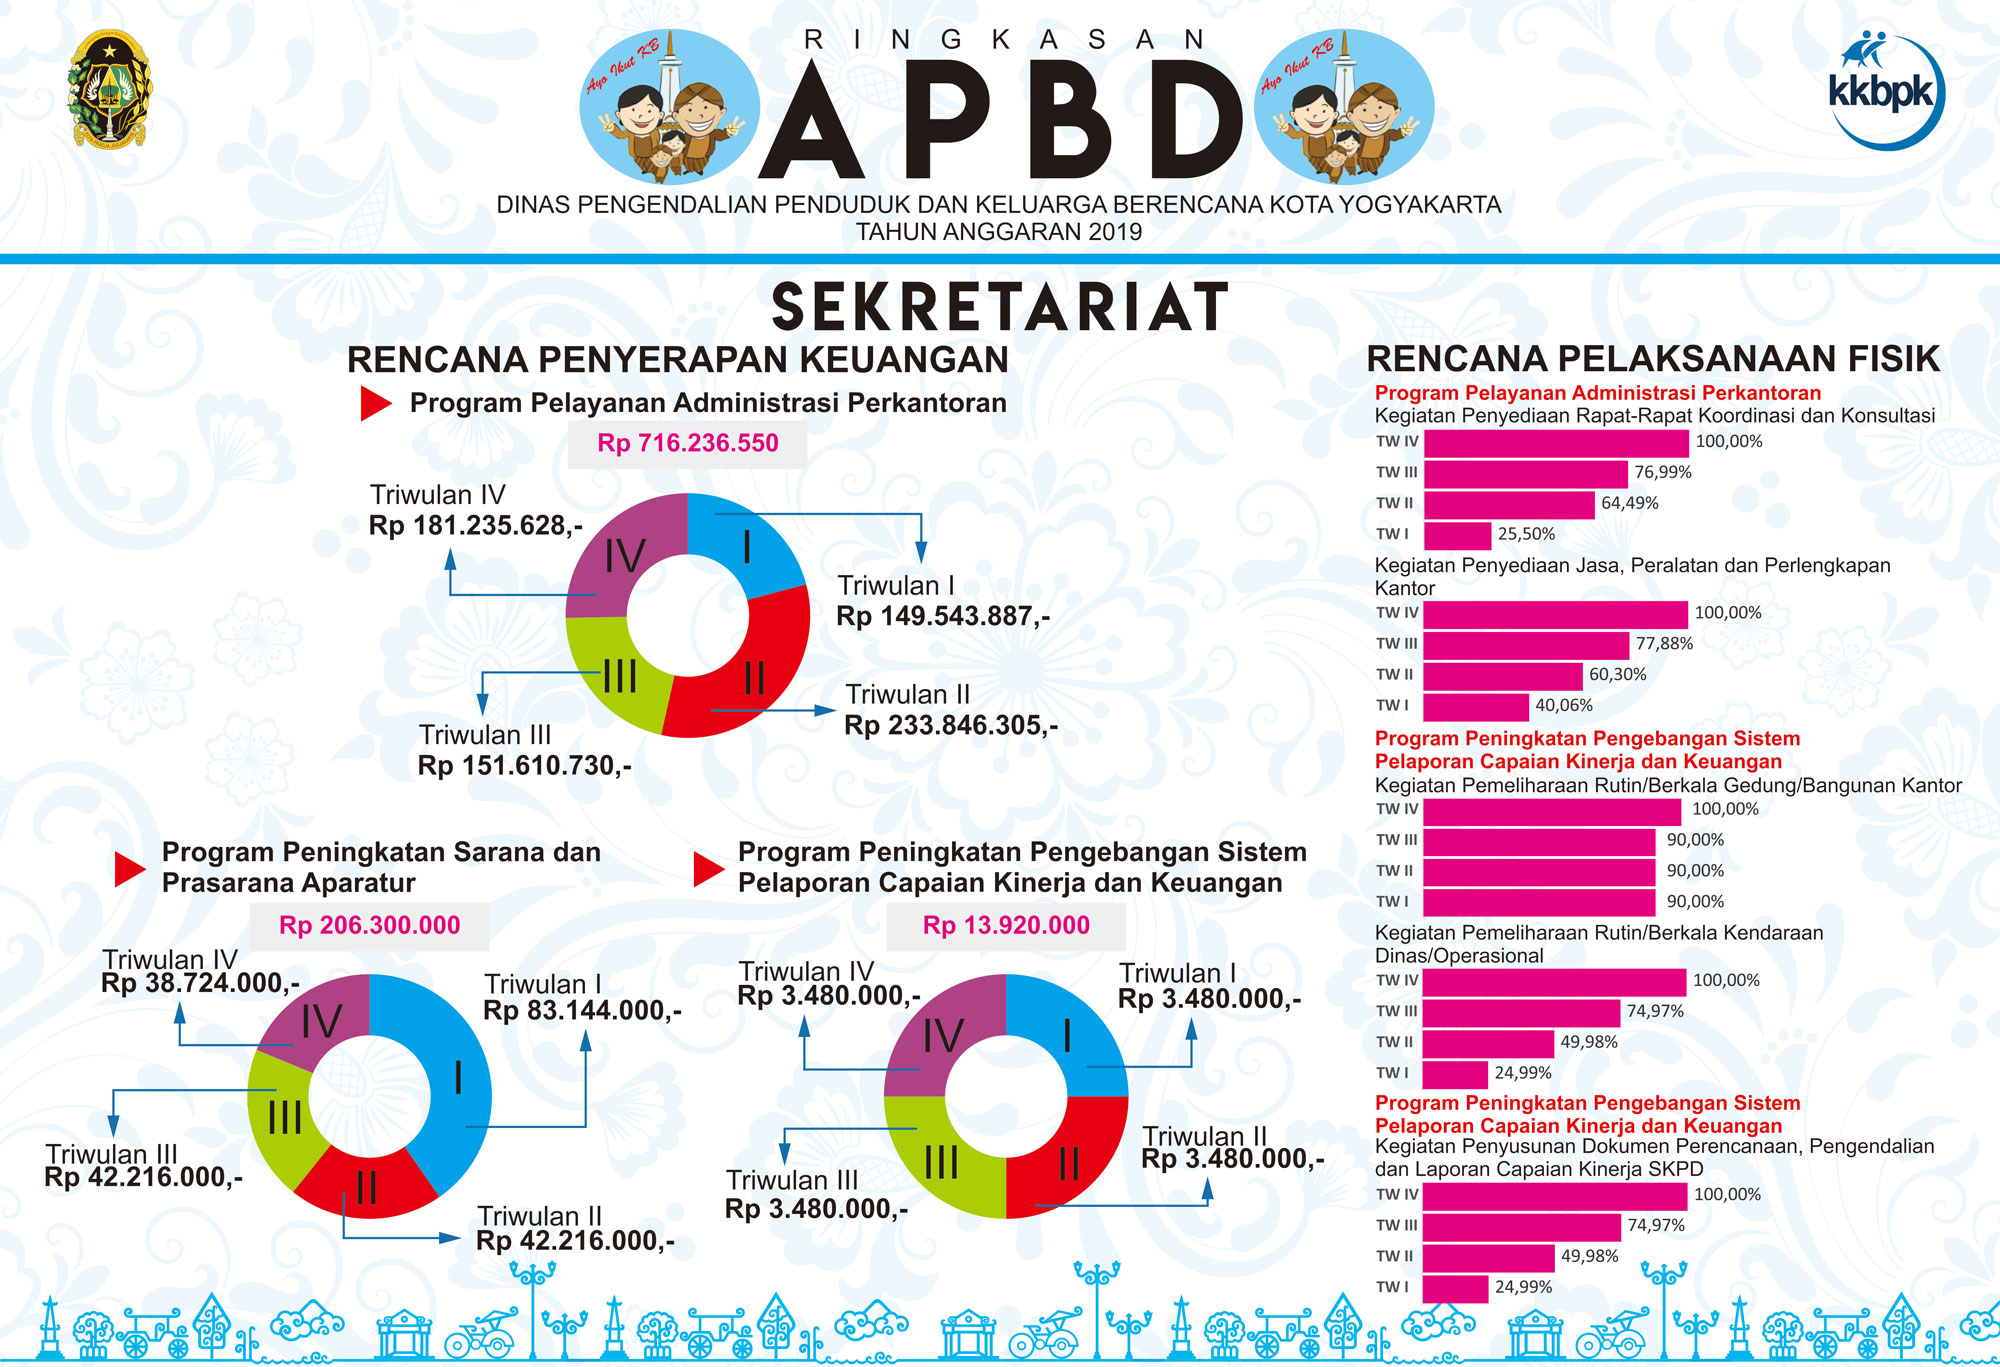 Ringkasan APBD DPPKB Kota Yogyakarta - Sekretariat